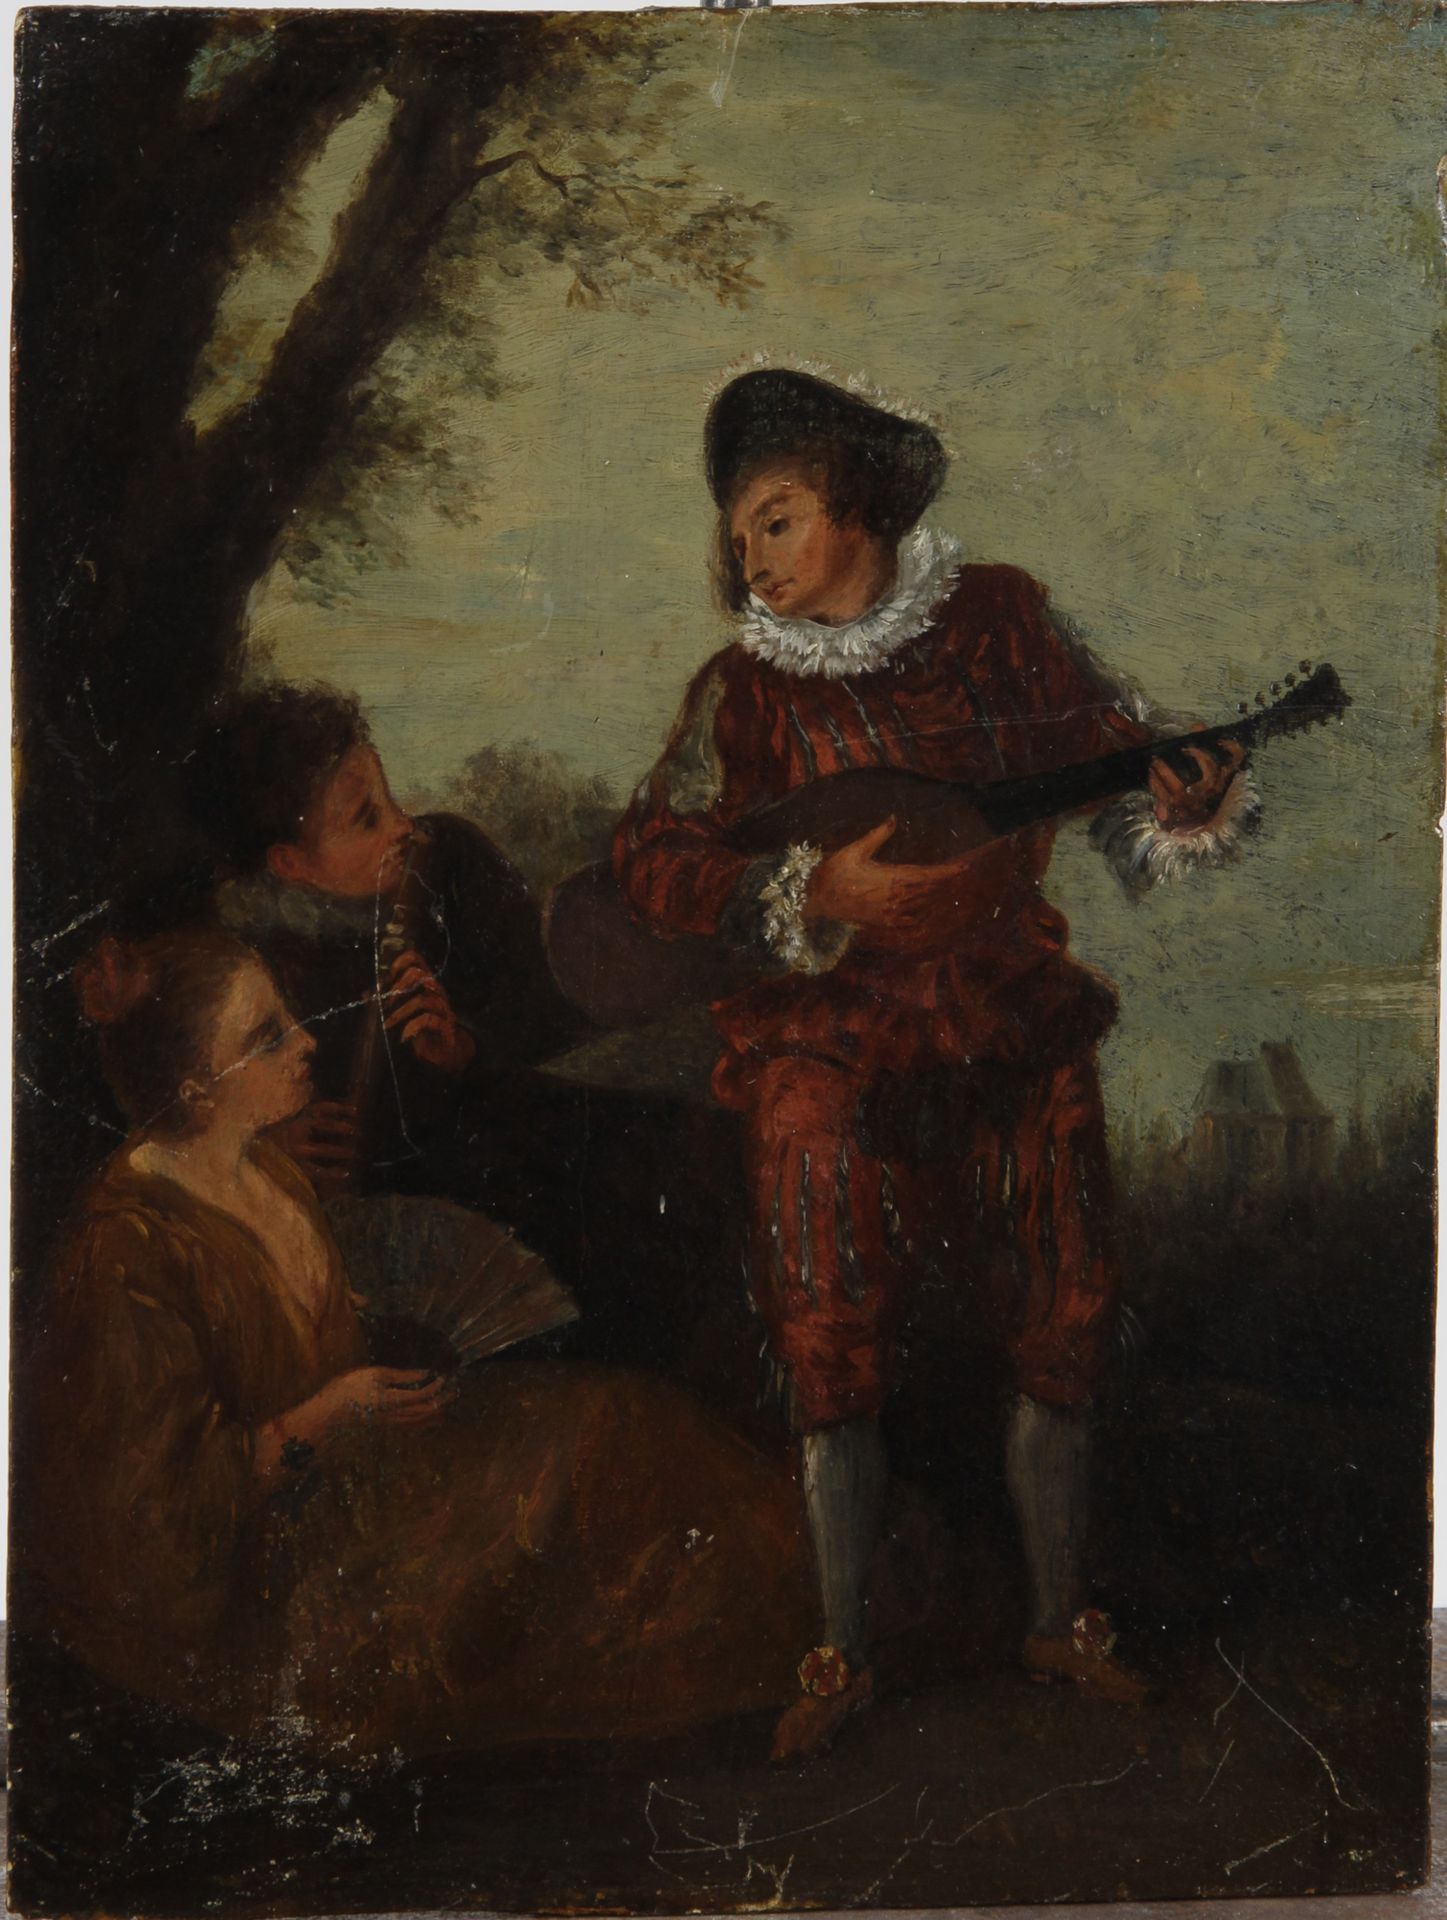 Null 华托的风格，"Le concert galant"，板上油画。

H.32 x W. 23.5 cm

(面板略有弯曲，有小的划痕)